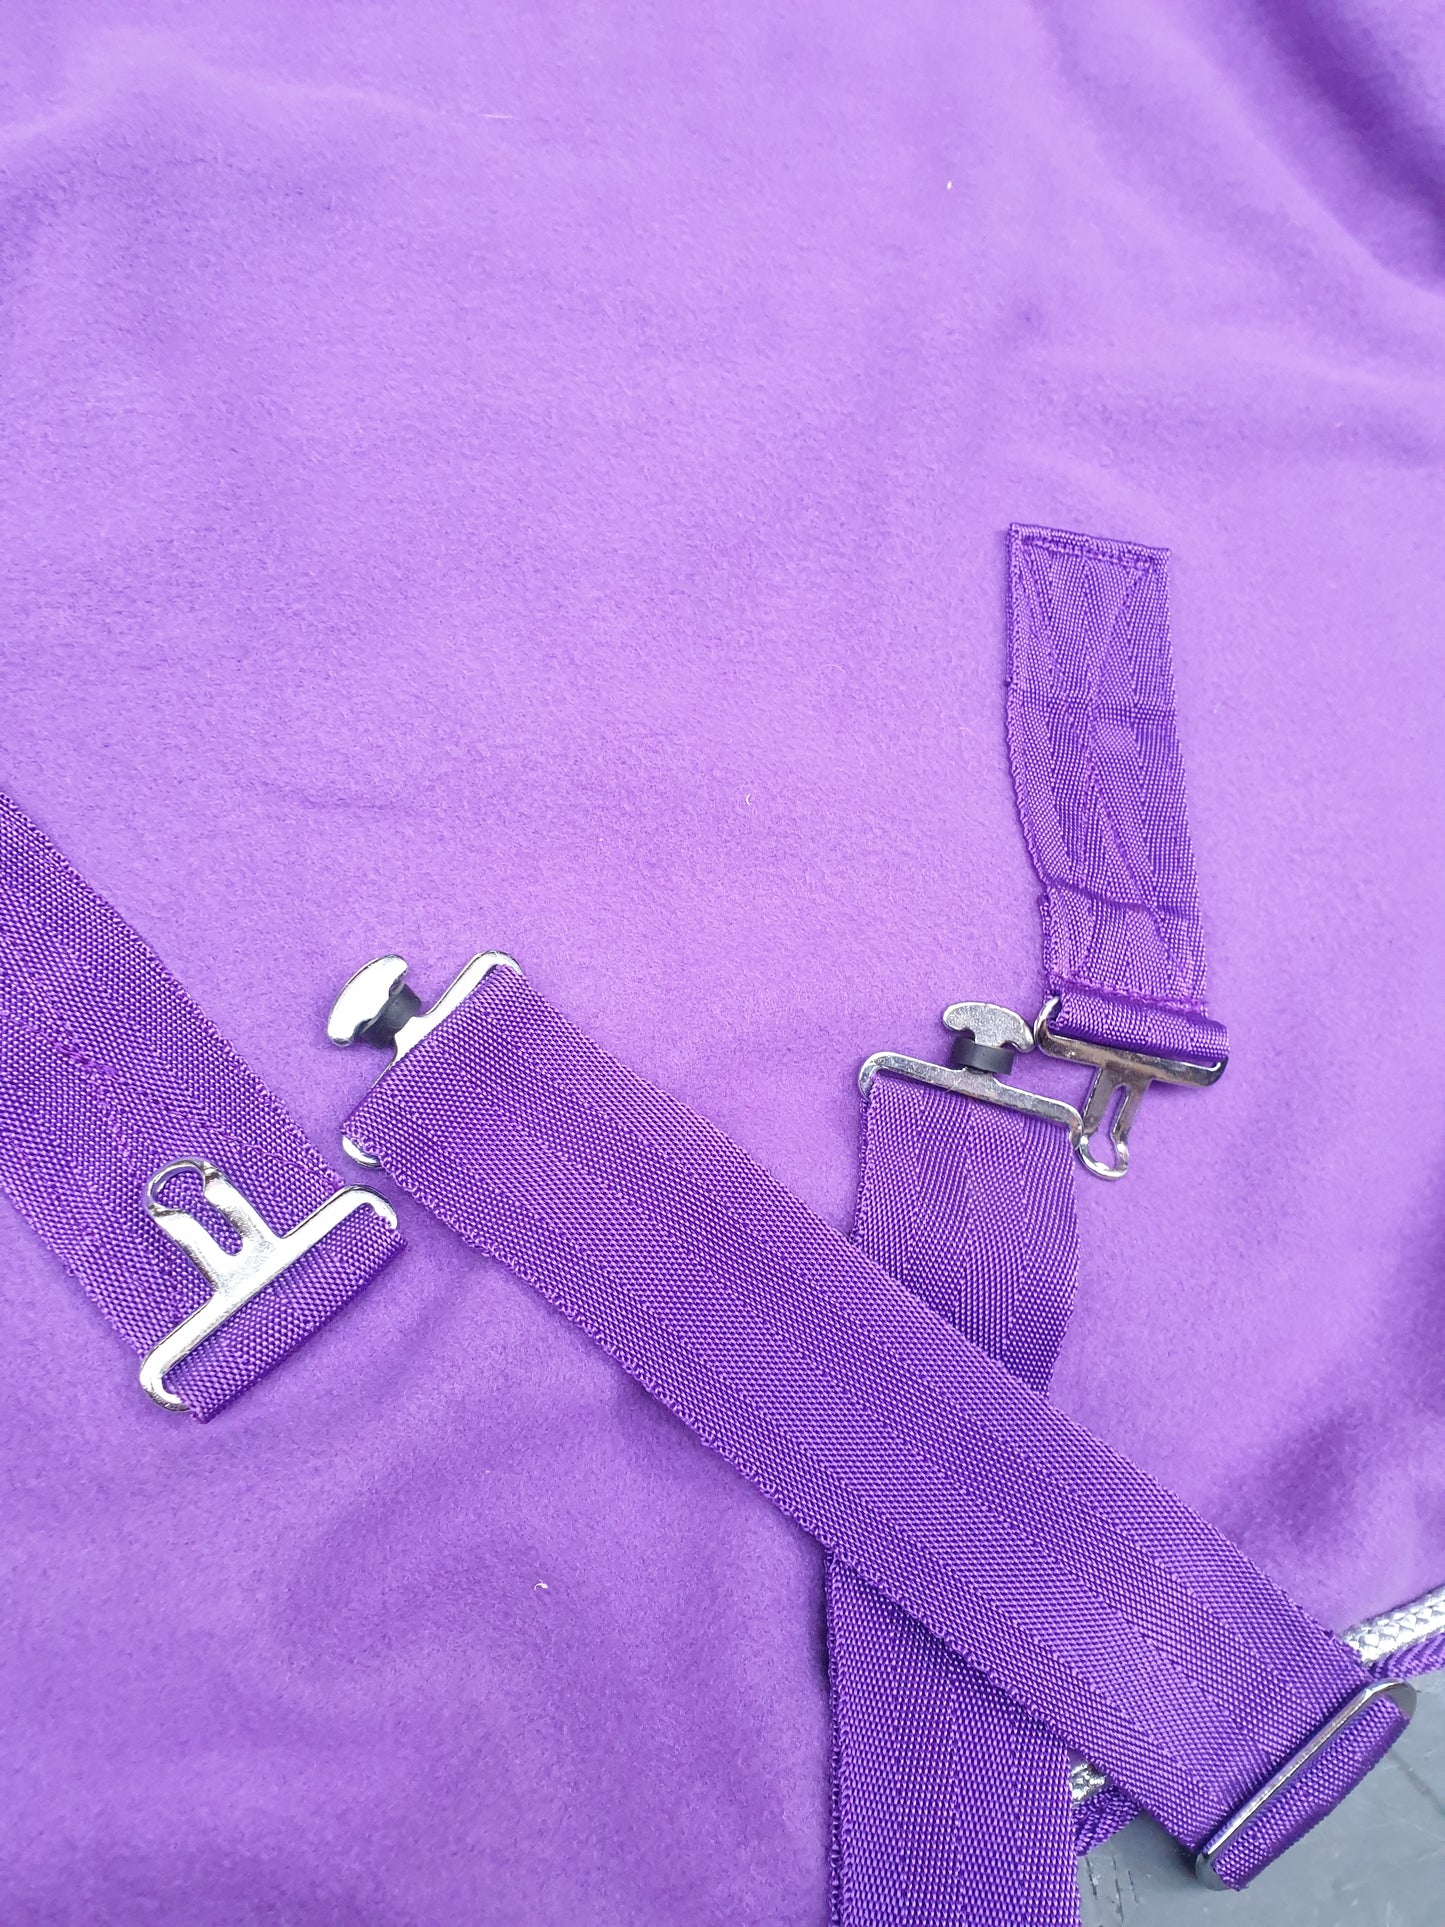 New shop marked 4'0" purple fleece FREE POSTAGE❤️